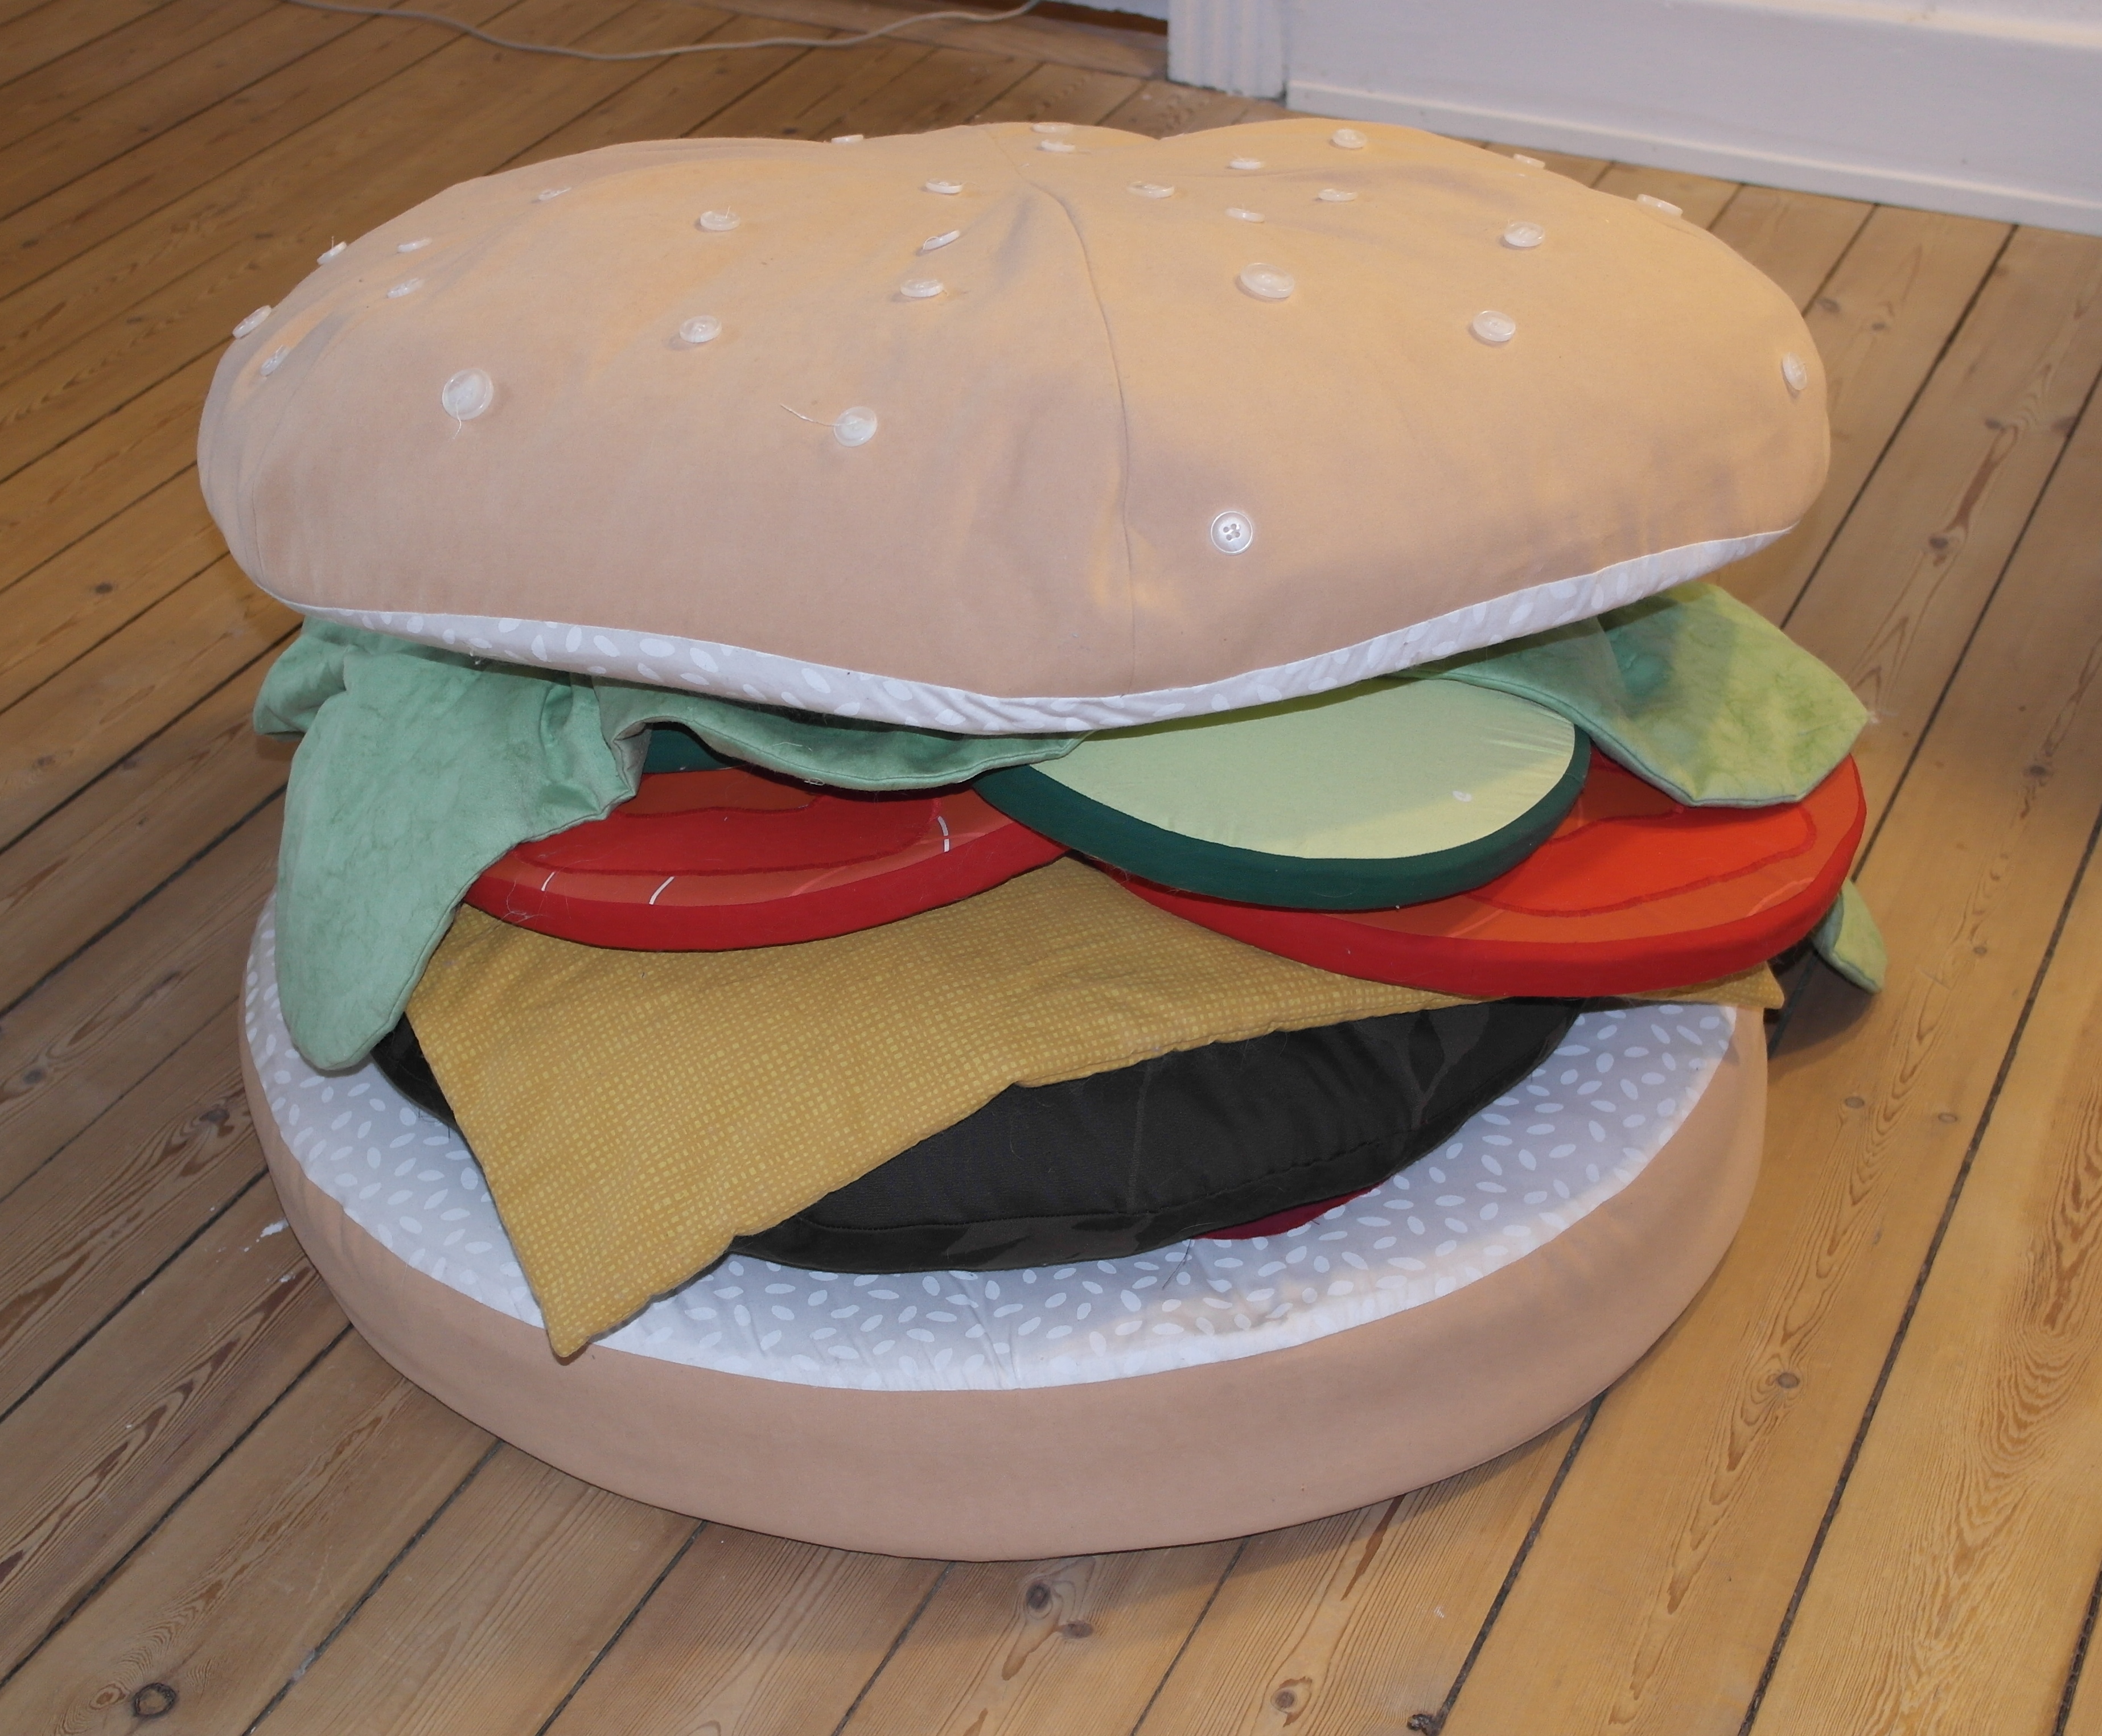 Super size burger